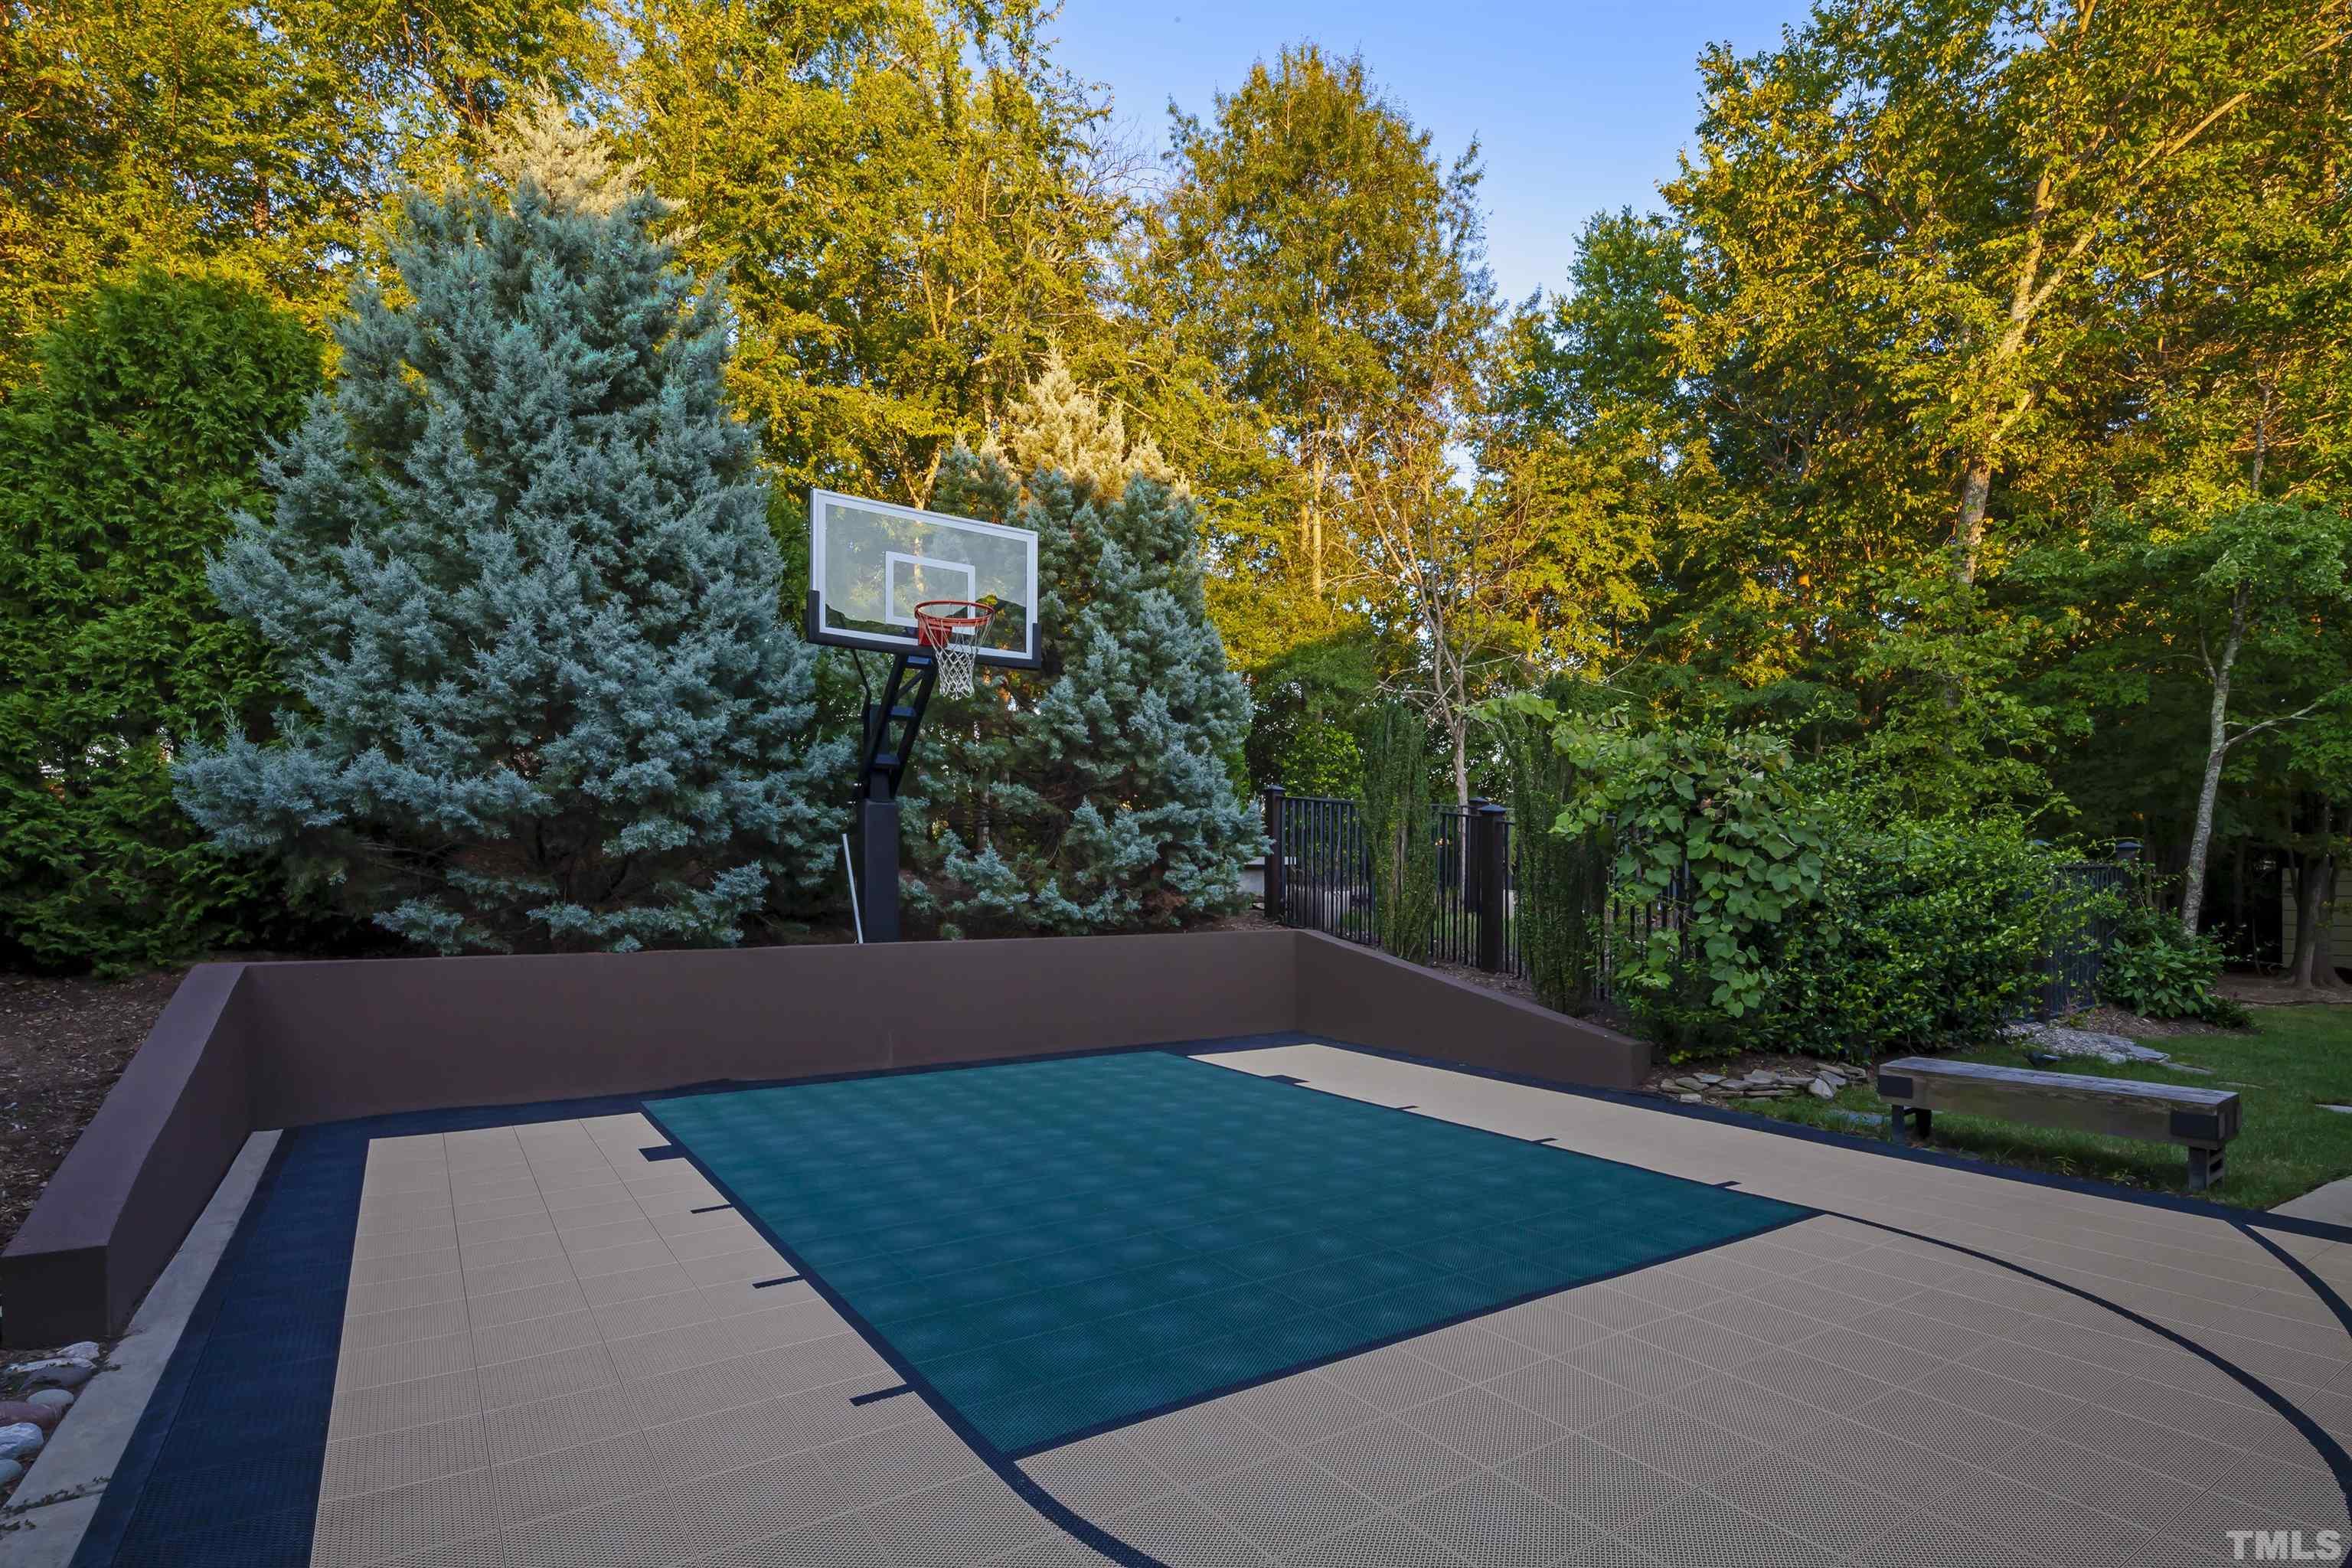 BasketBall Court & Goal